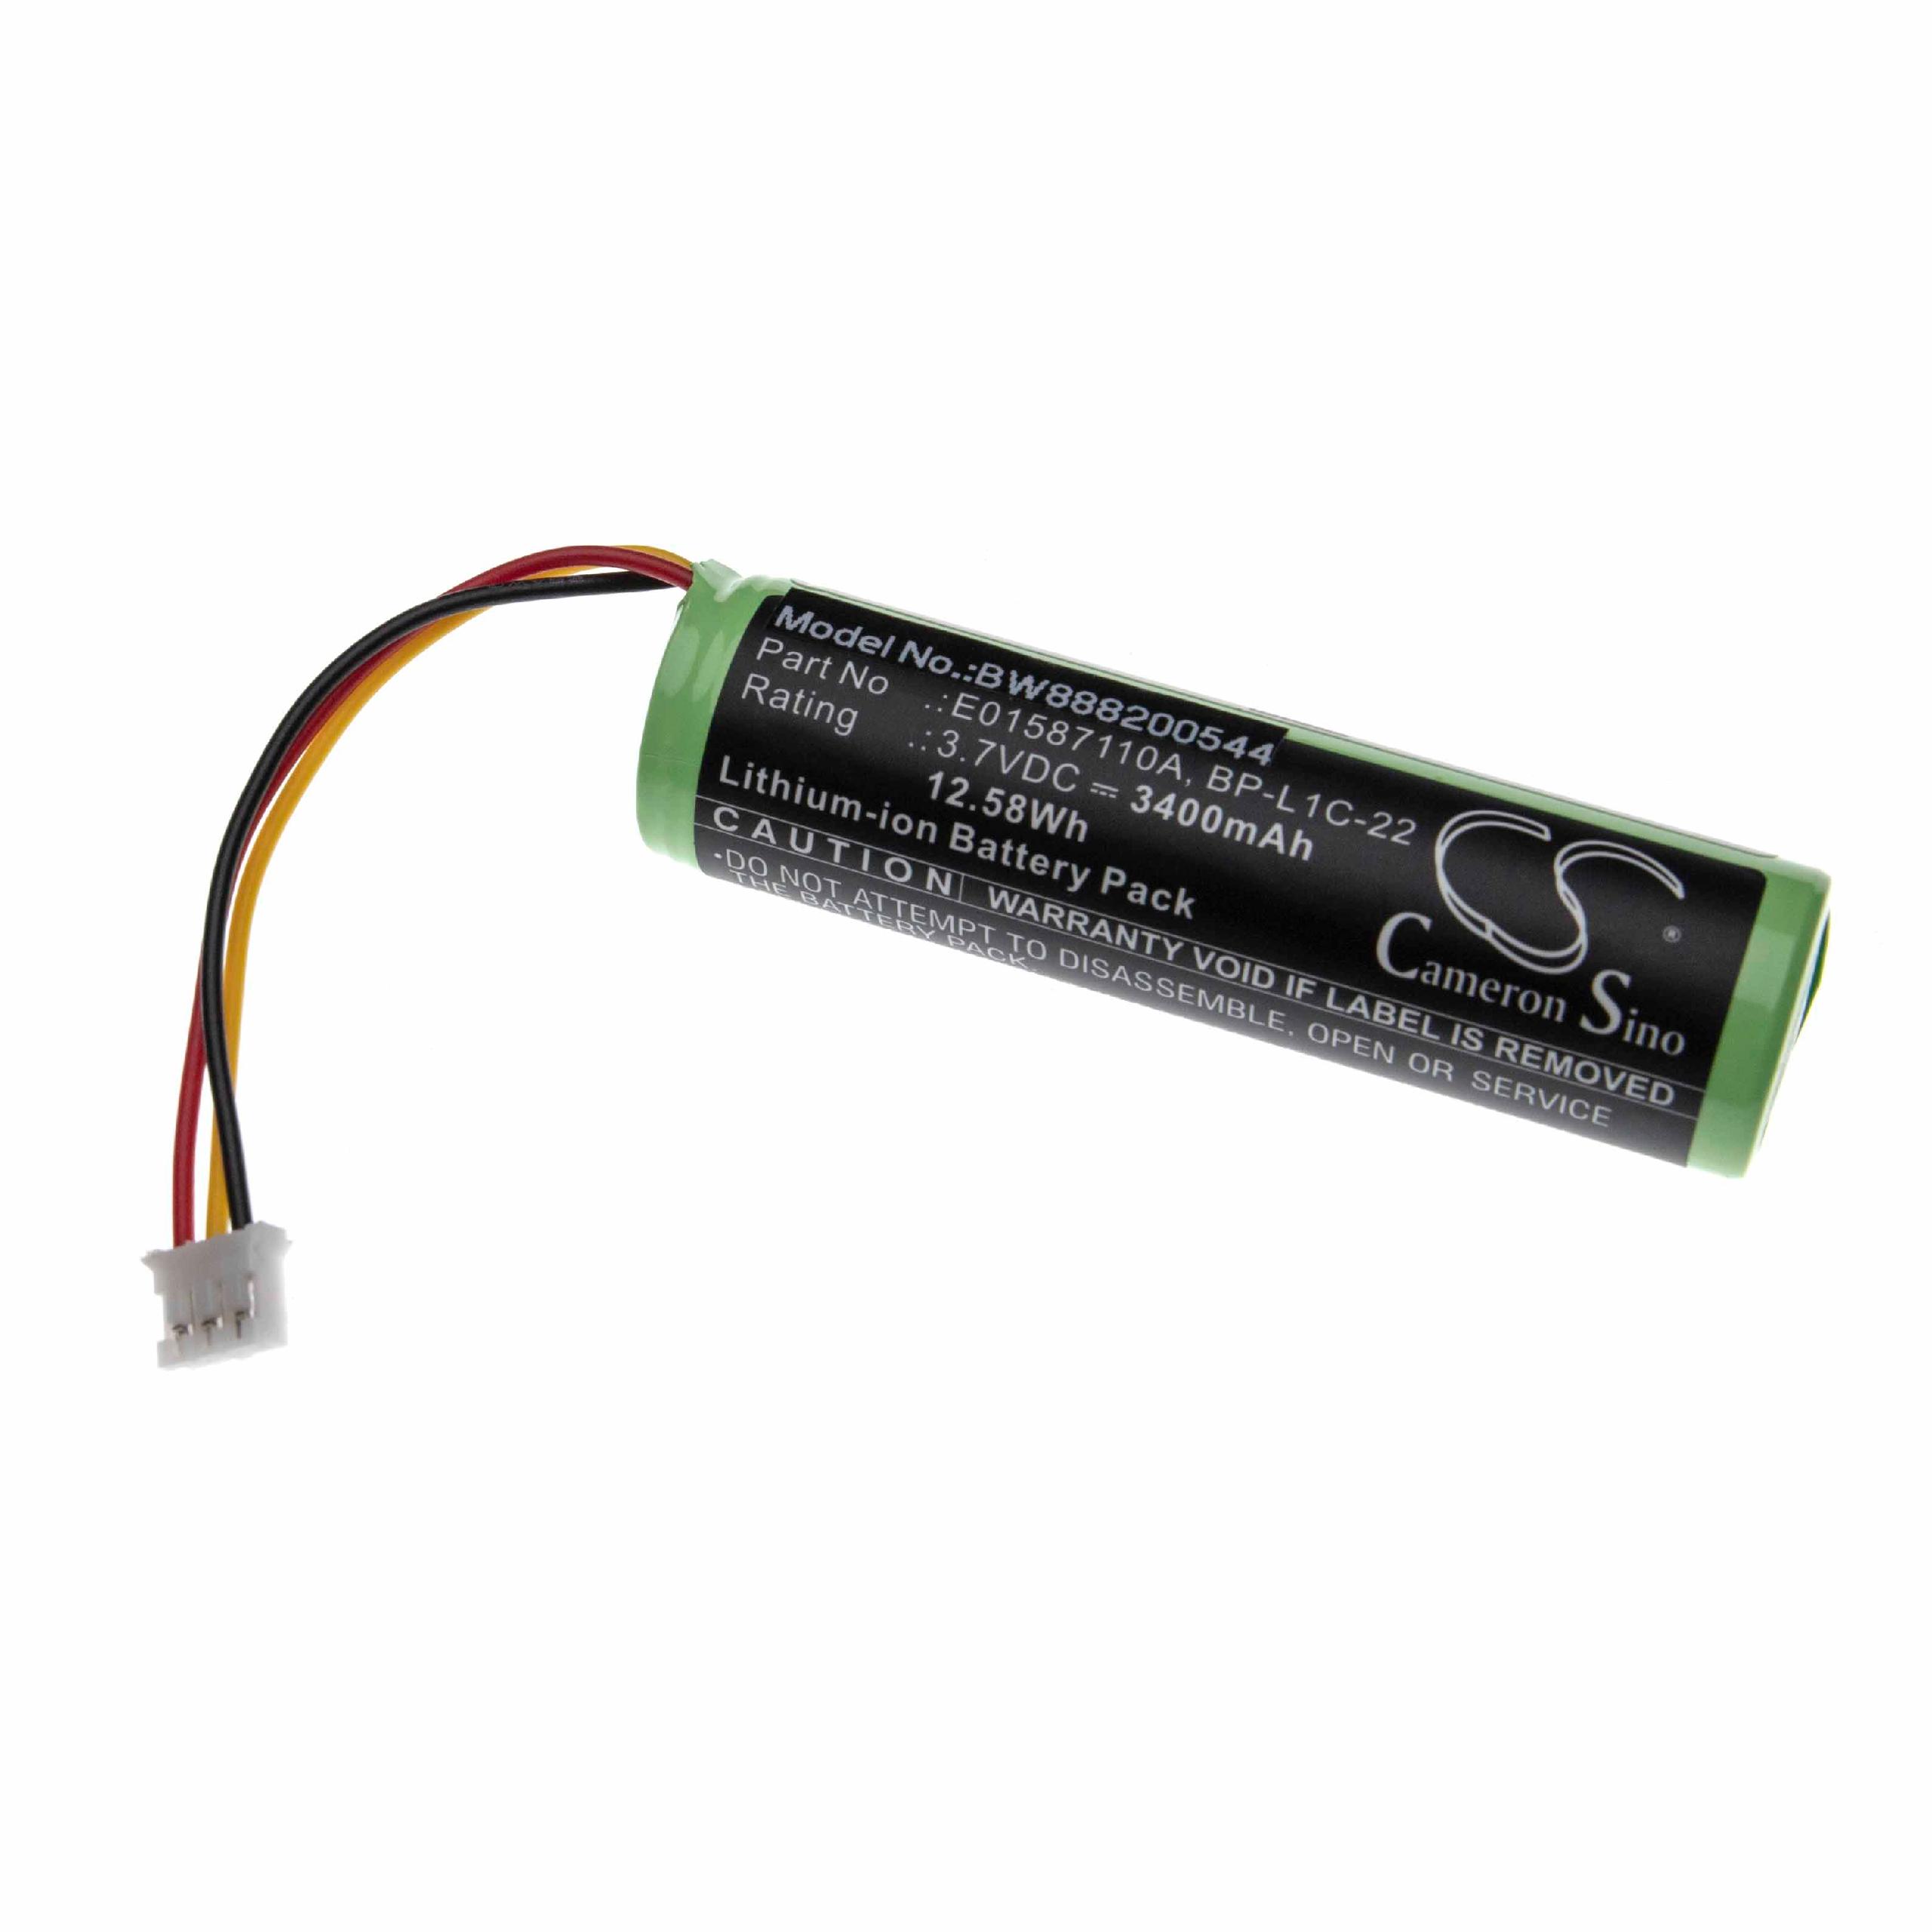 Batteria per MP3 music player sostituisce Tascam E01587110A, BP-L1C-22 Tascam - 3400mAh 3,7V Li-Ion